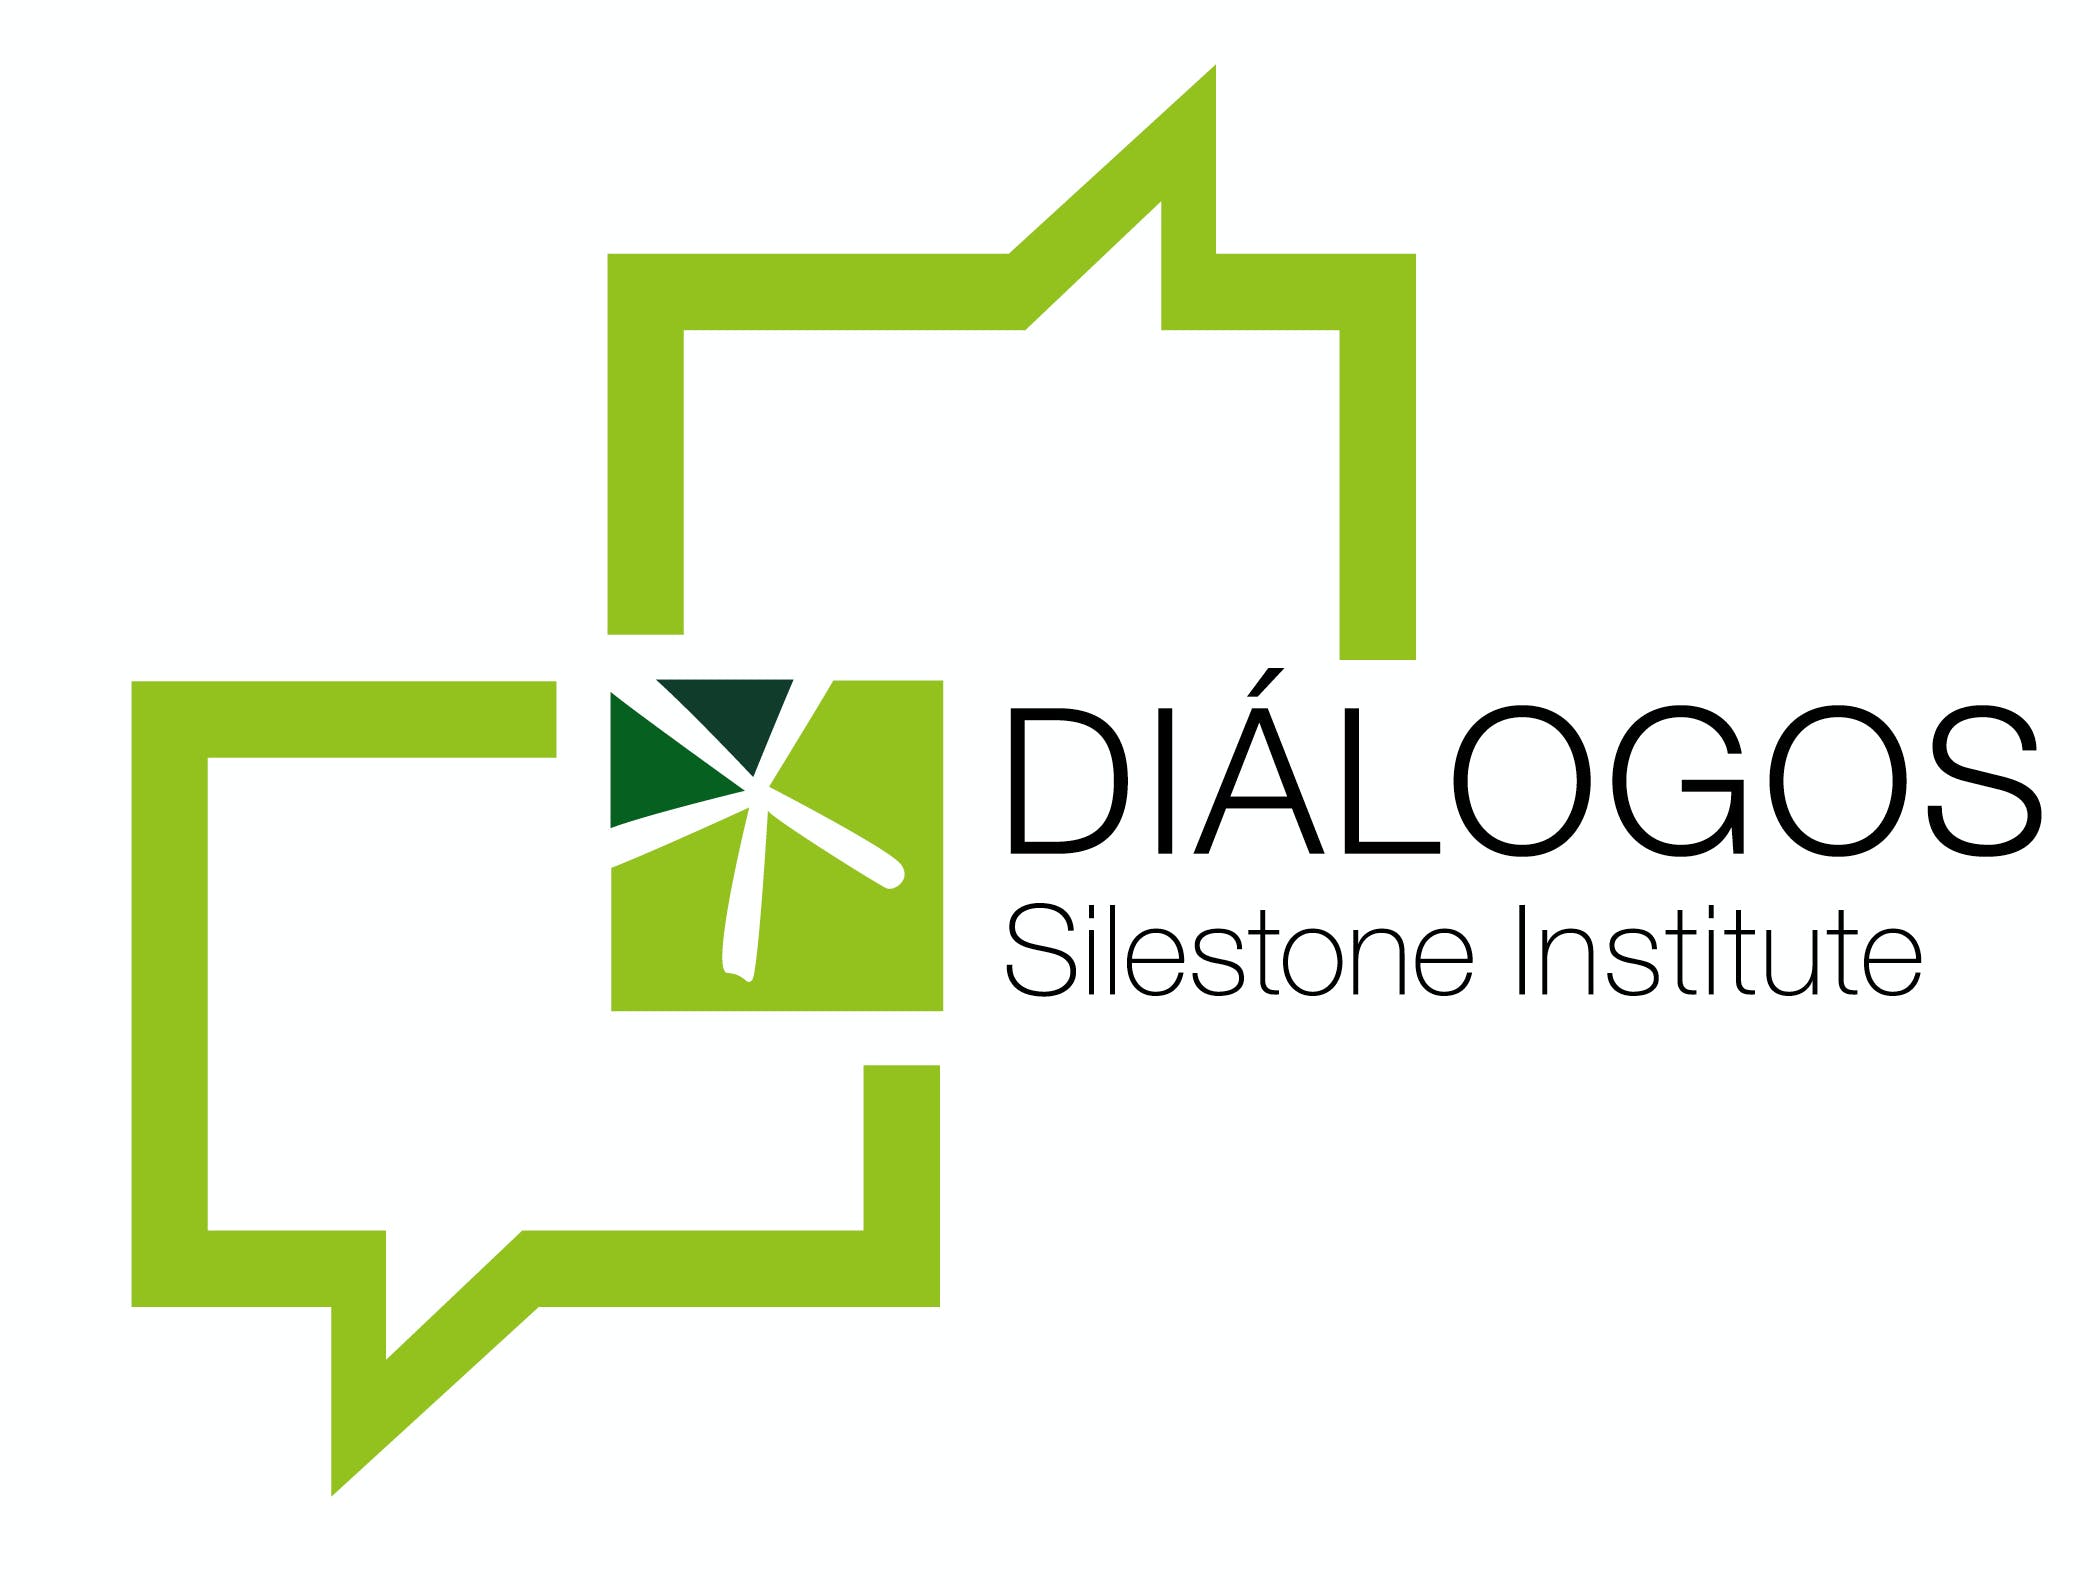 Image 36 of DialogInstSilestone 1 in Cosentino sponsors the Madrid Design Festival 2019 - Cosentino